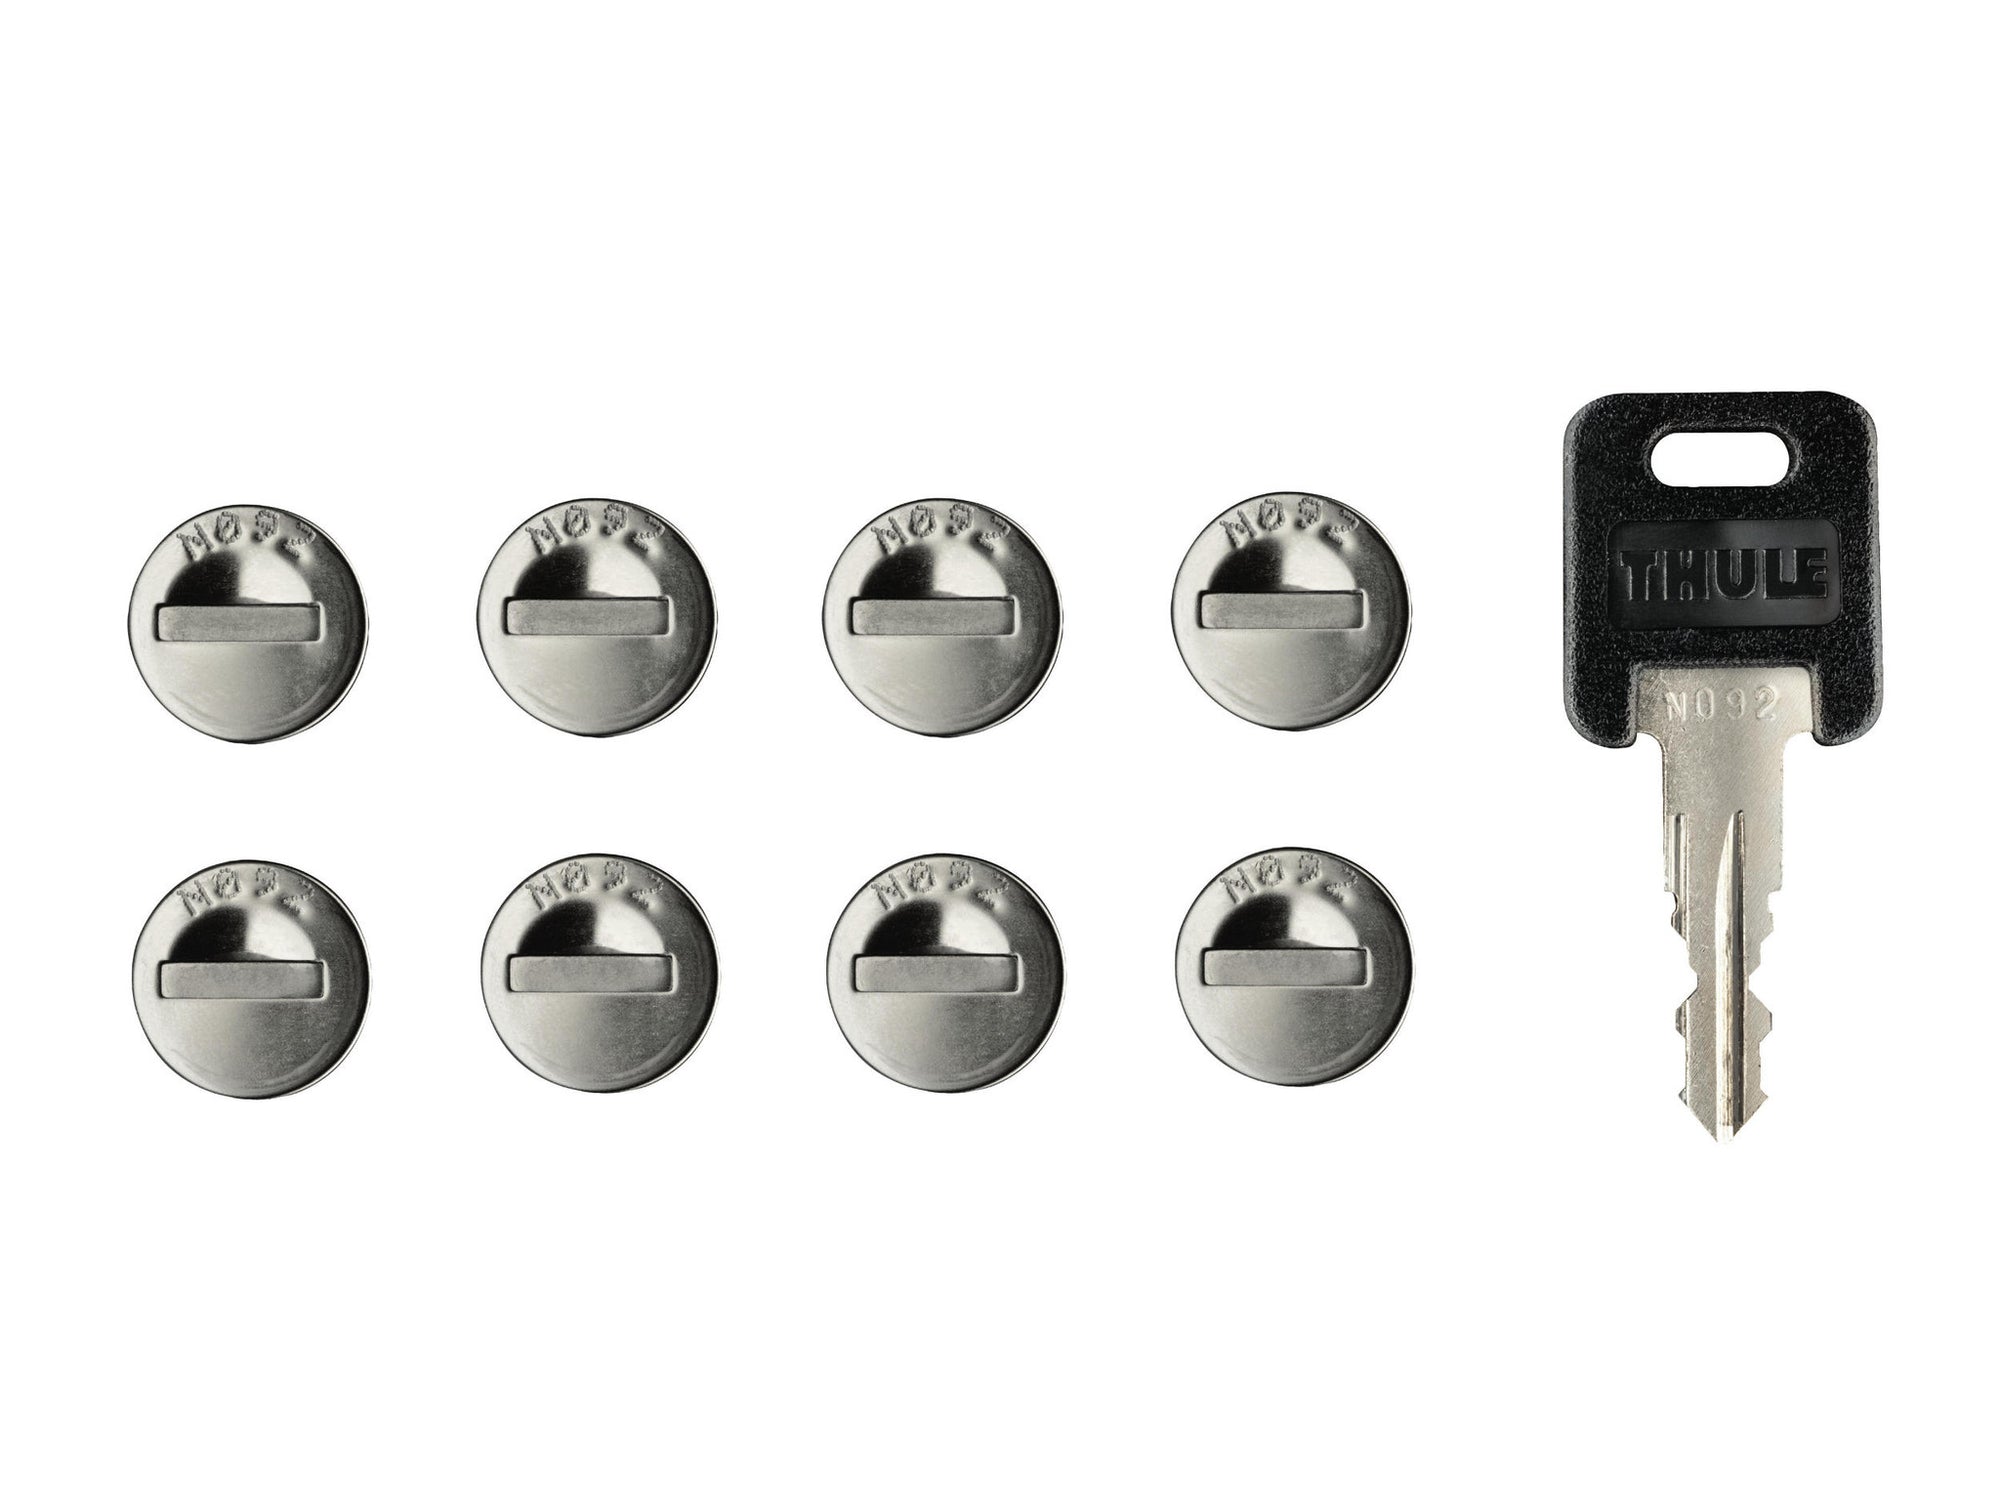 Thule Keyed Alike Lock Cylinder Sets - 8 Pack